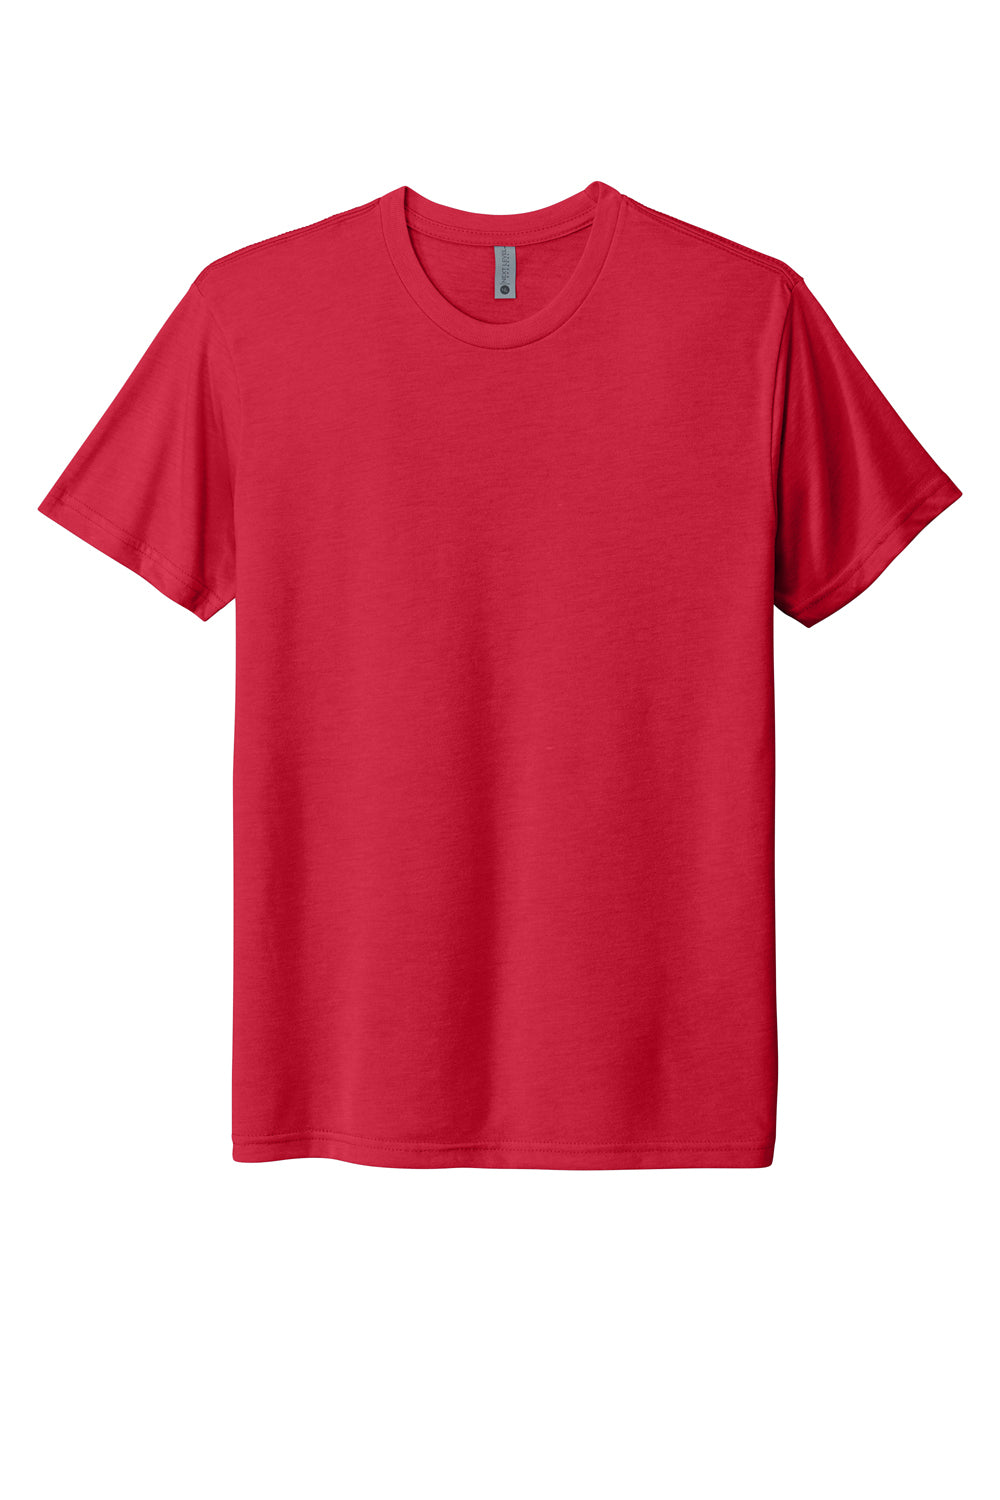 Next Level Mens Jersey Short Sleeve Crewneck T-Shirt Red Flat Front